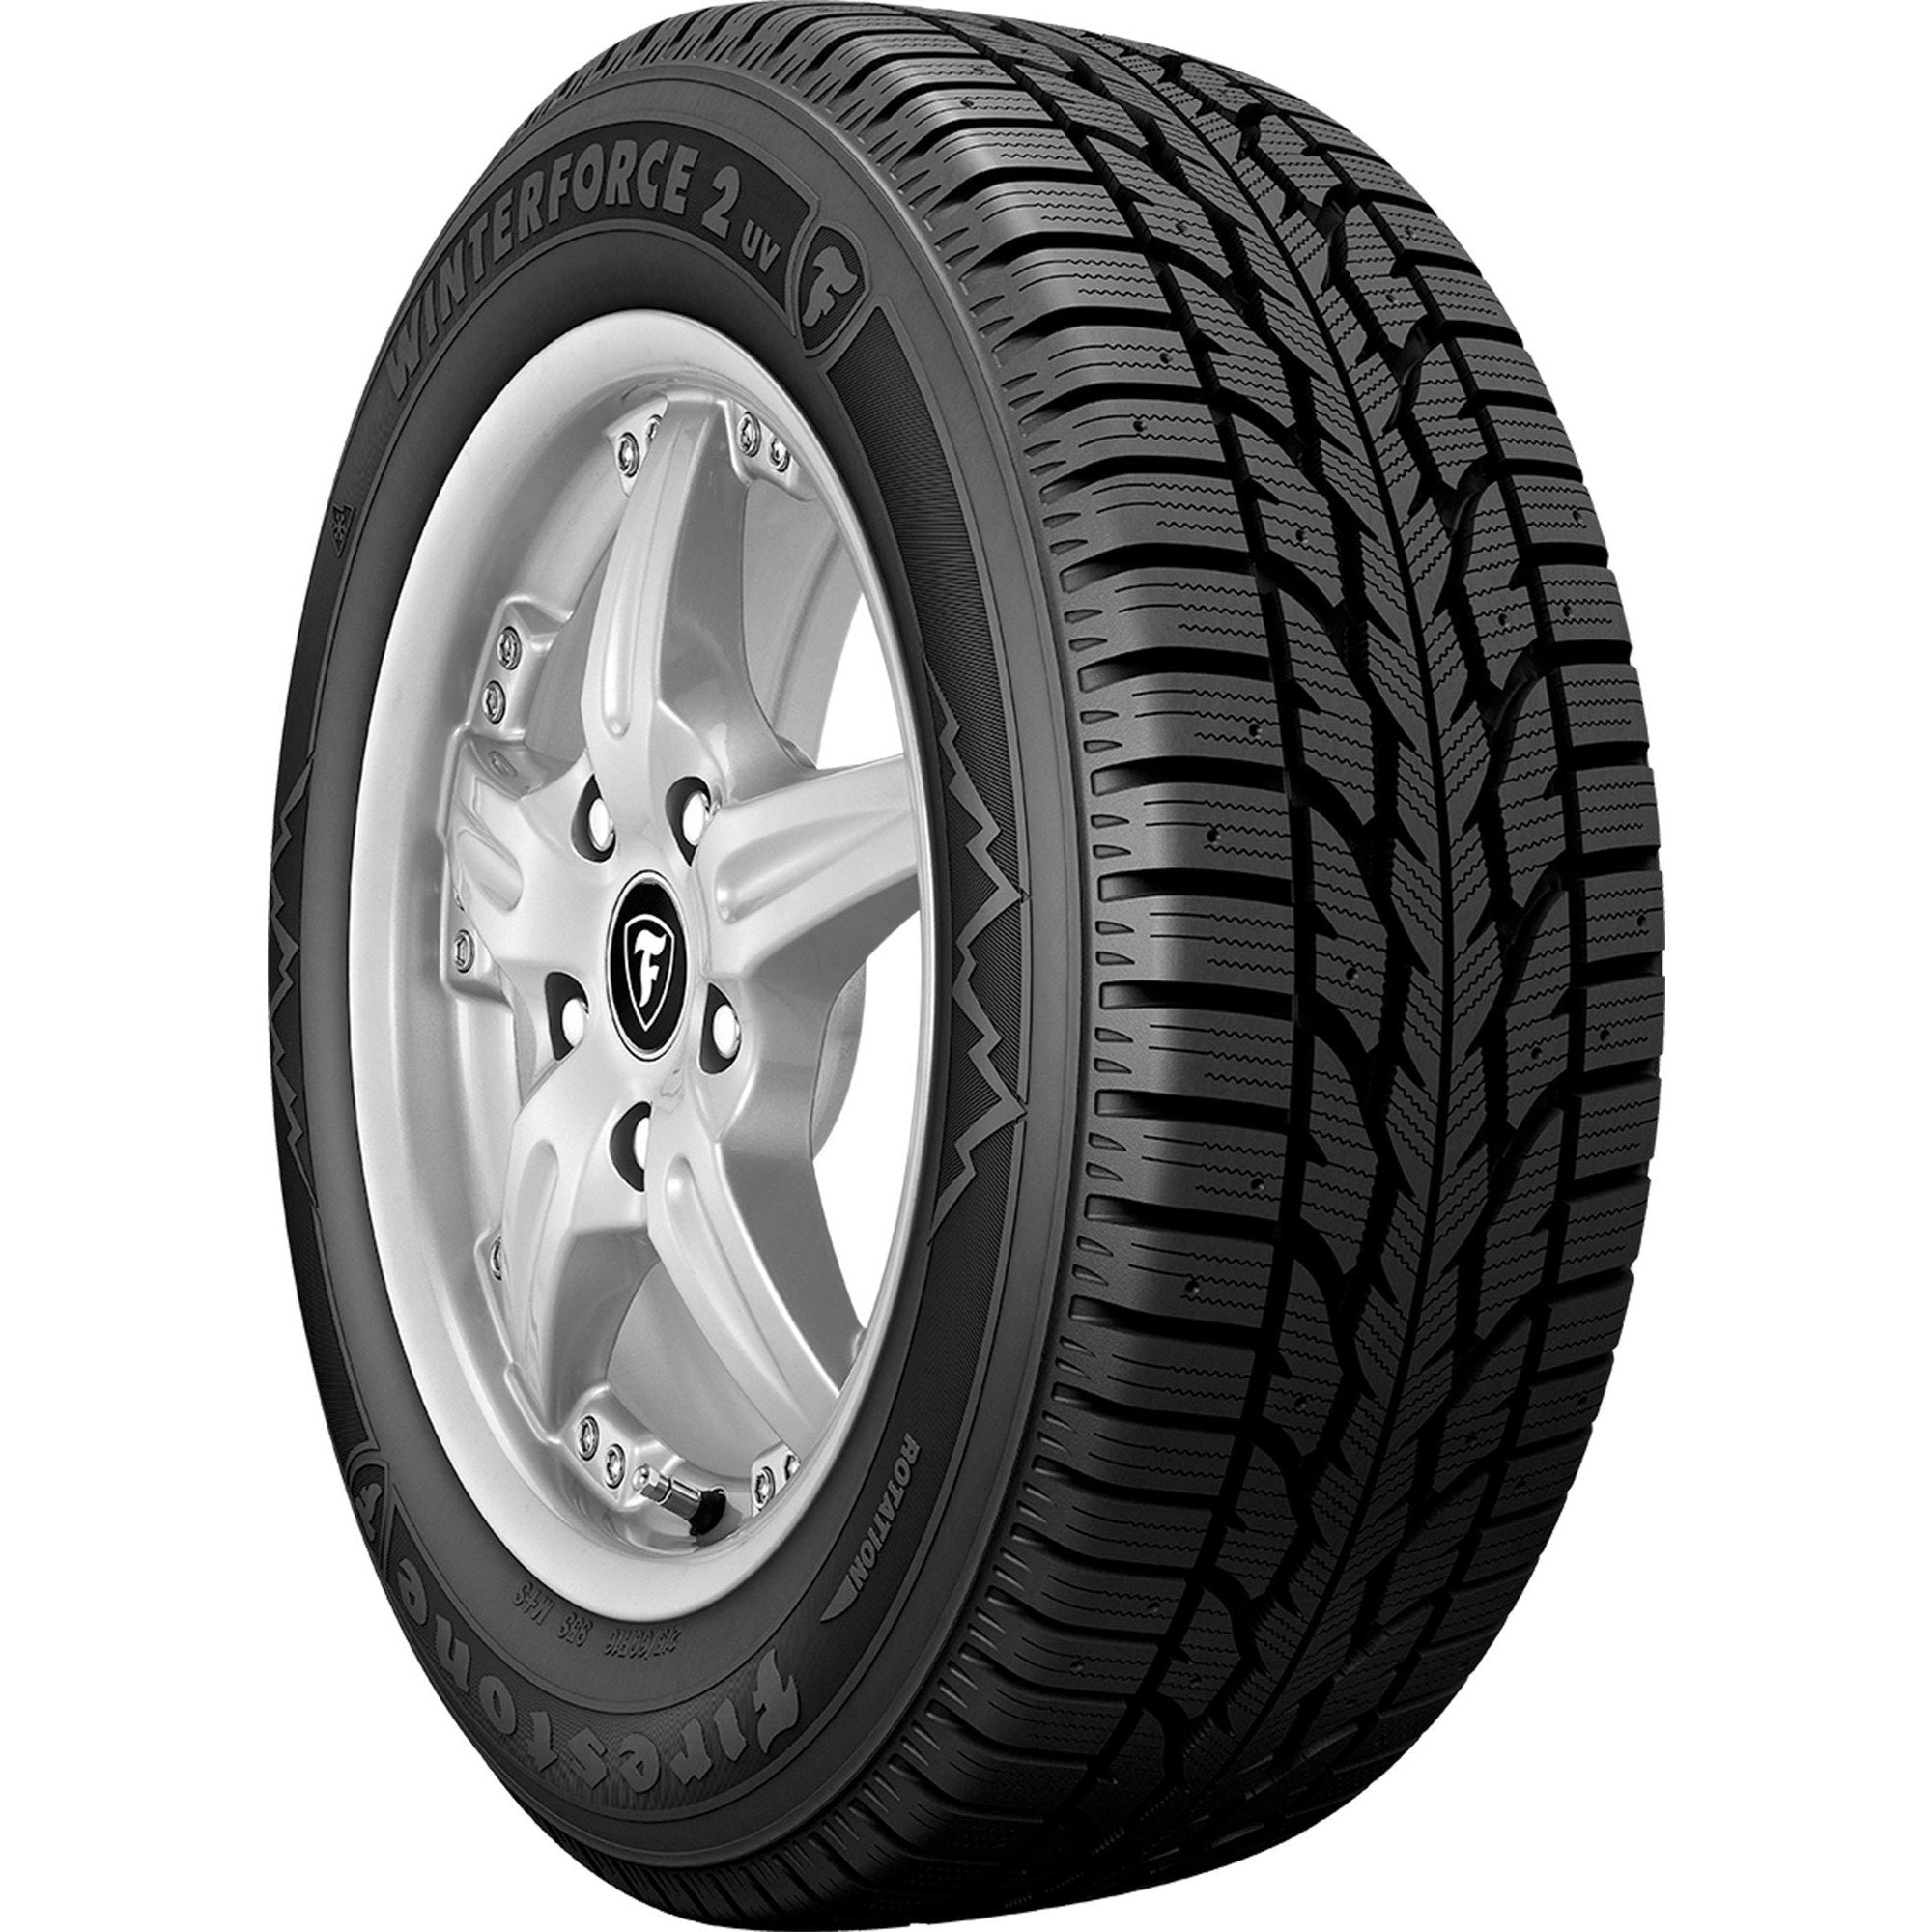 FIRESTONE WINTERFORCE2 UV 225/60R17 (27.6X8.9R 17) Tires